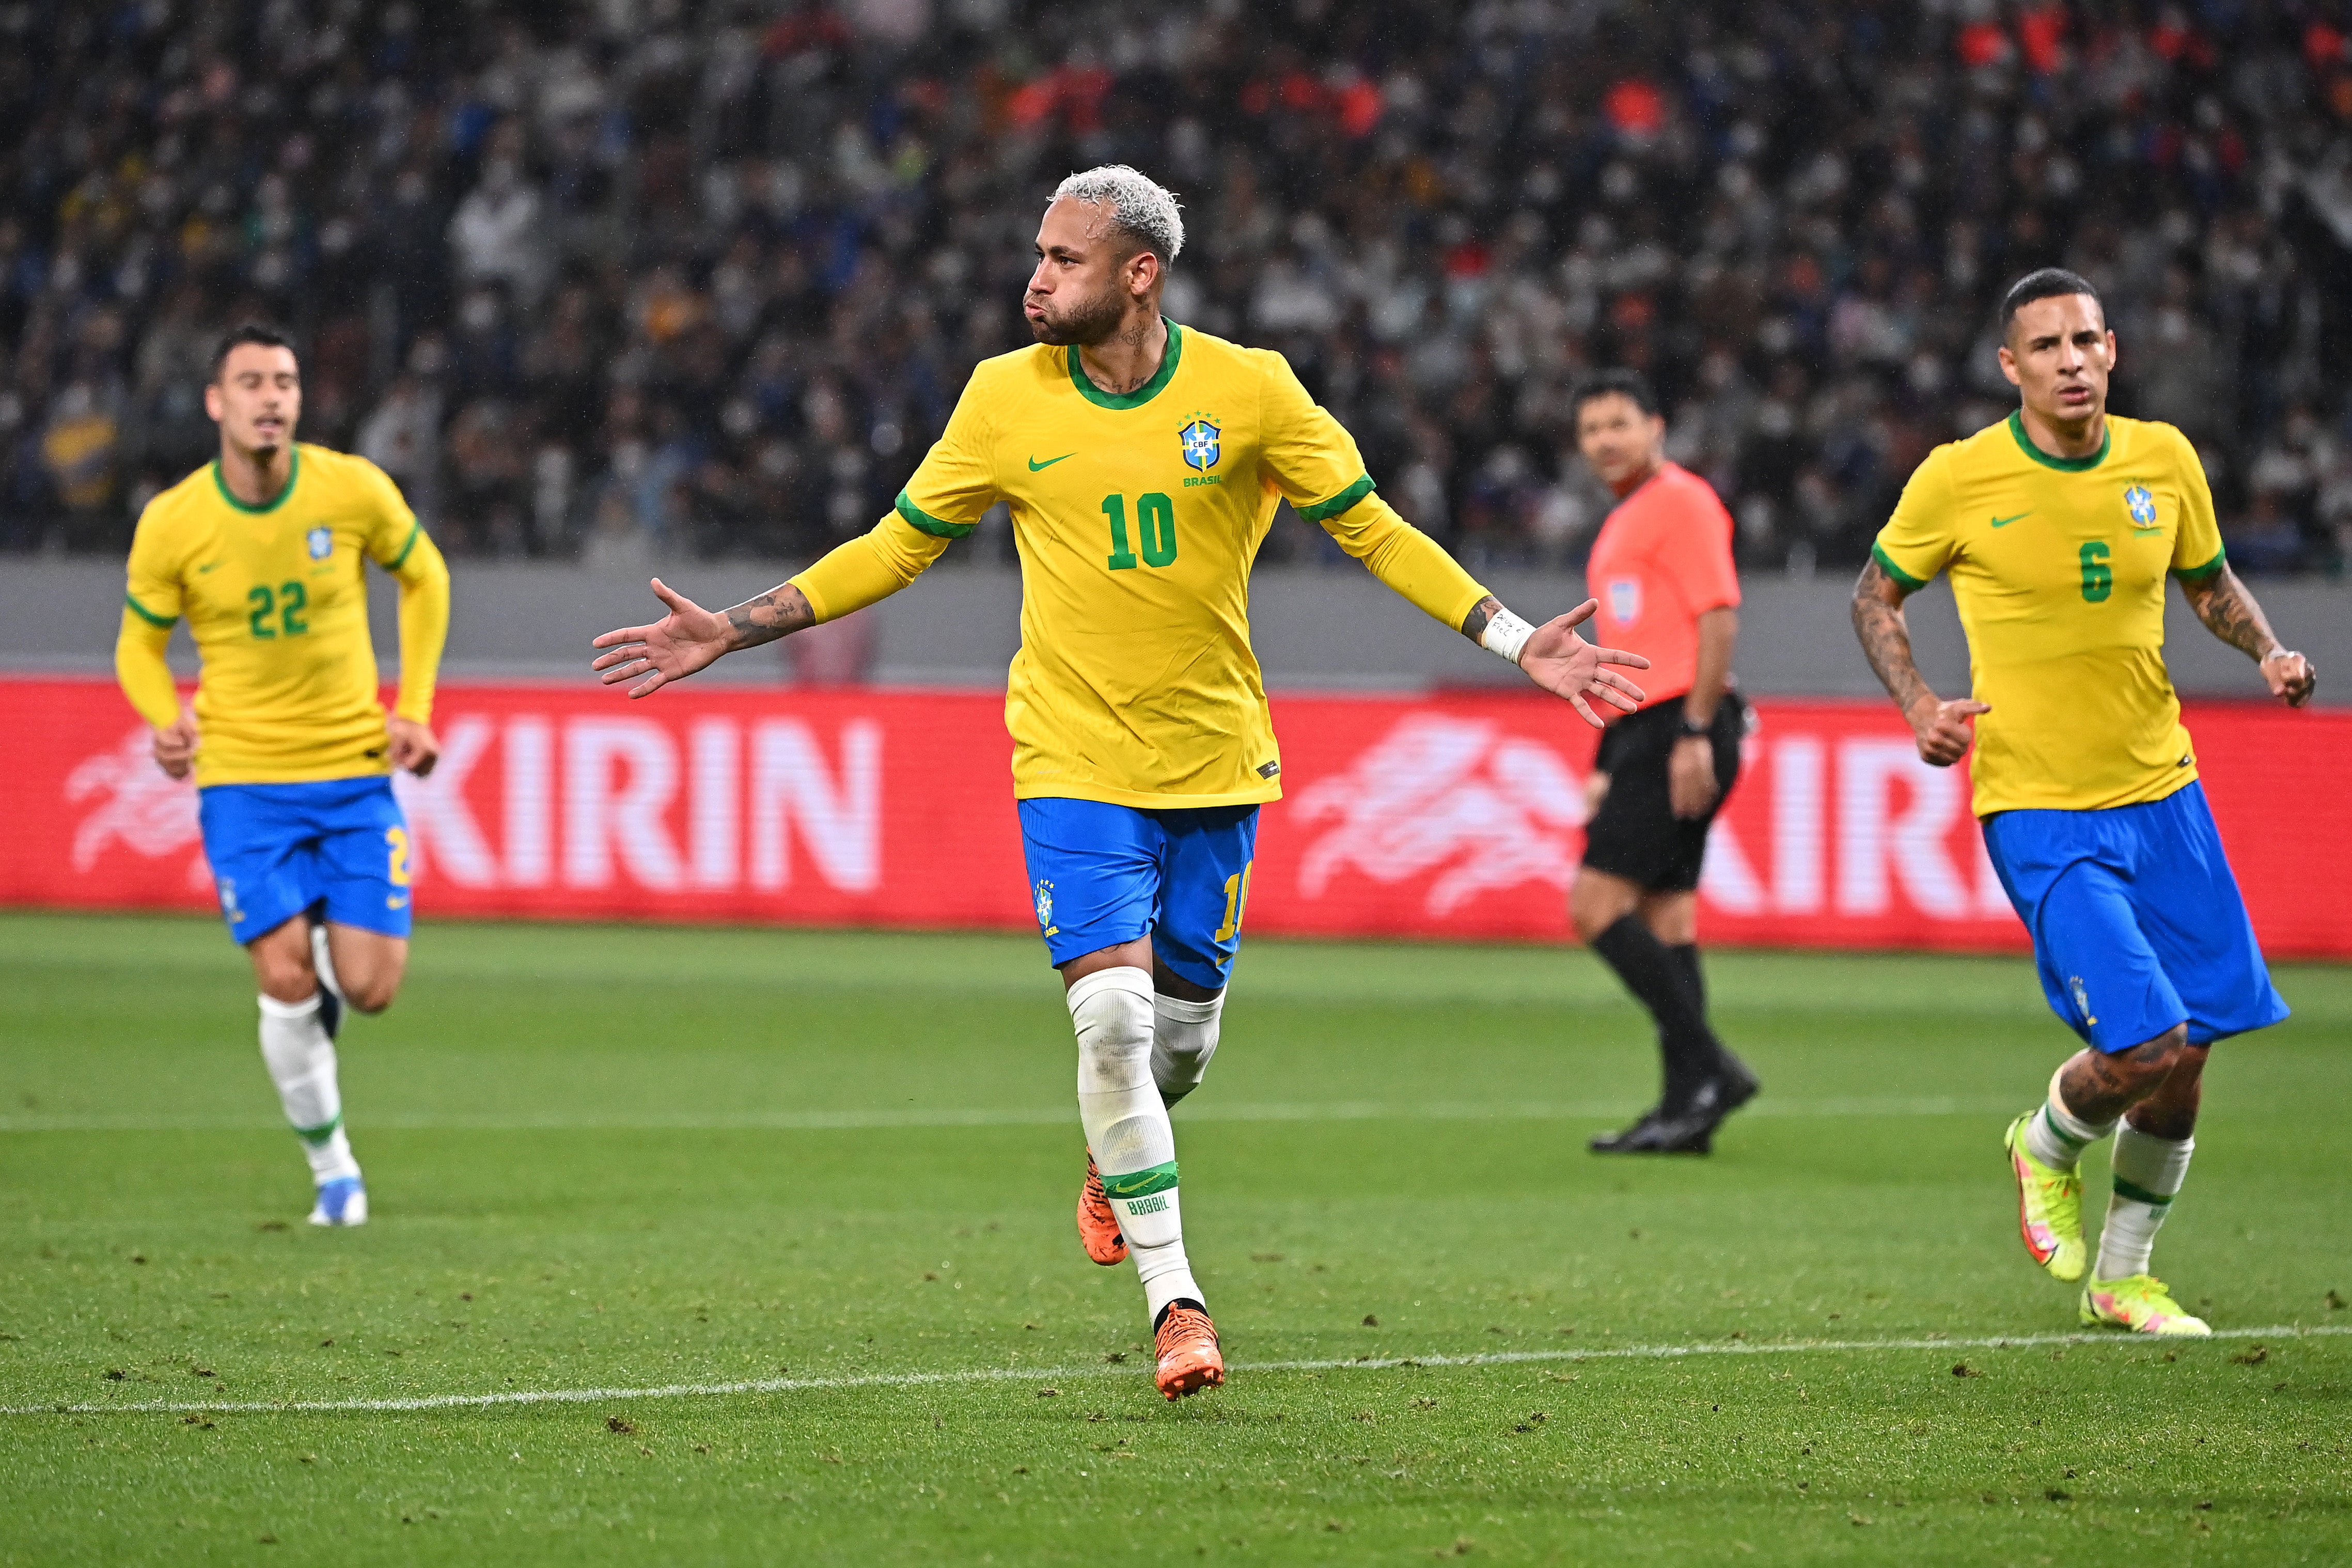 Neymar will be Brazil’s star man once again in Qatar